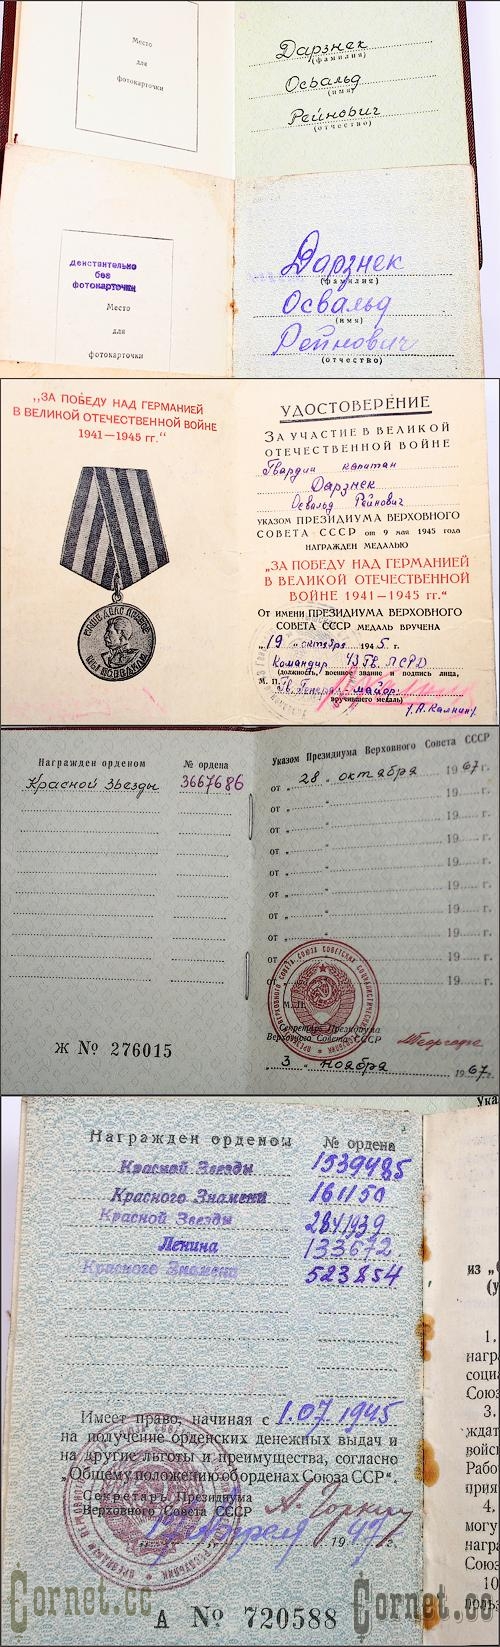 Комплект наград НКВД - МГБ